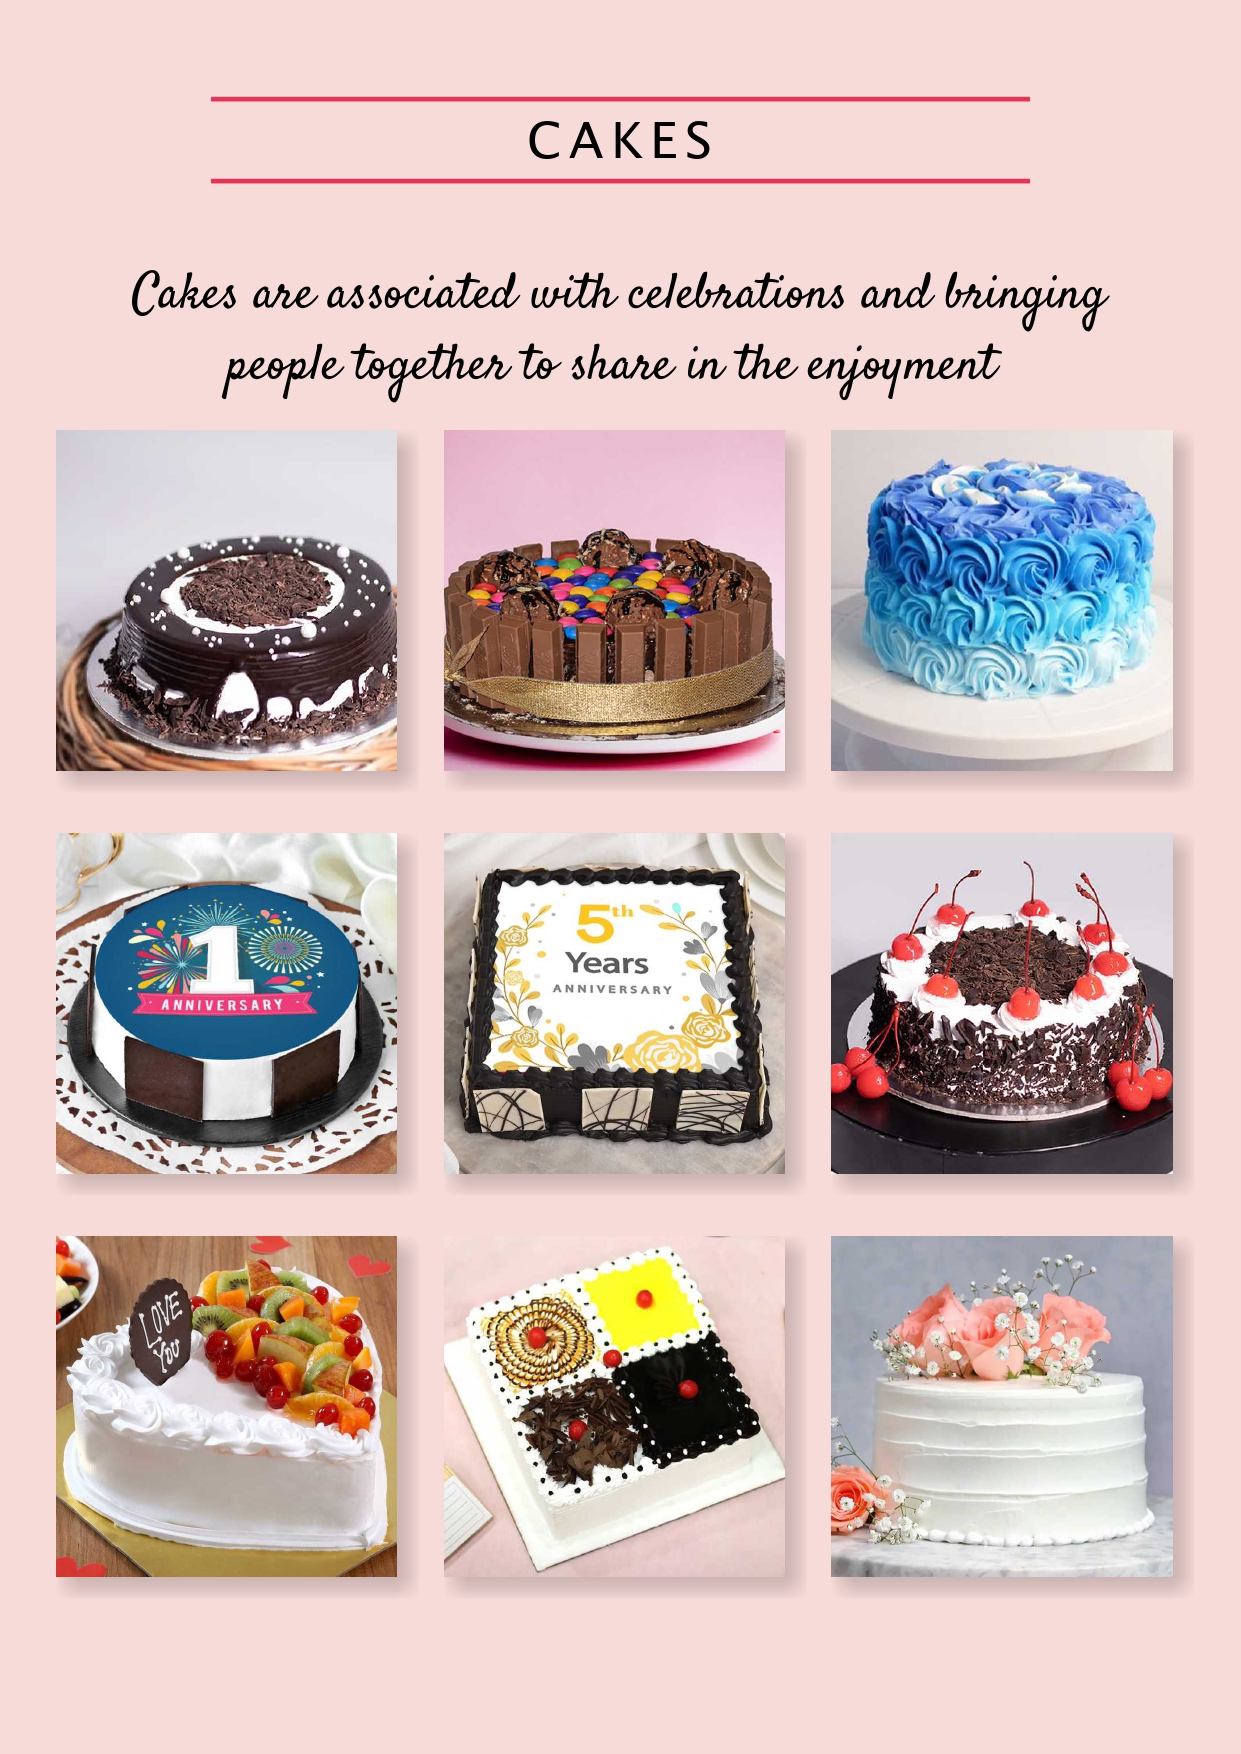 Bake N Cake in Pisoli,Pune - Best Cake Shops in Pune - Justdial